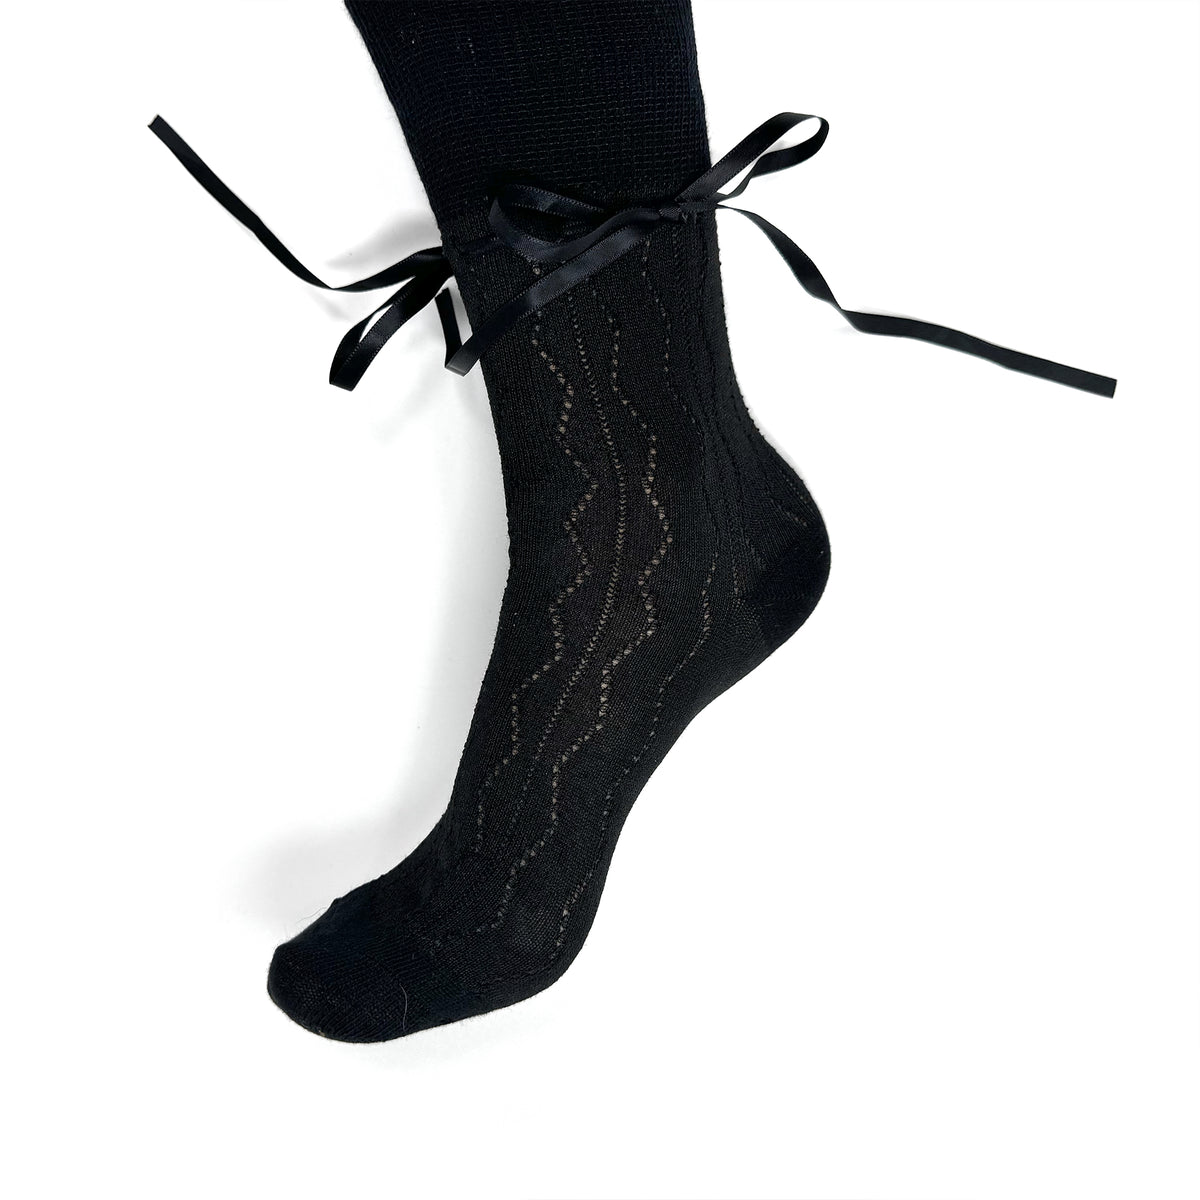 BALLERINA socks with satin ribbon lace up ties - black